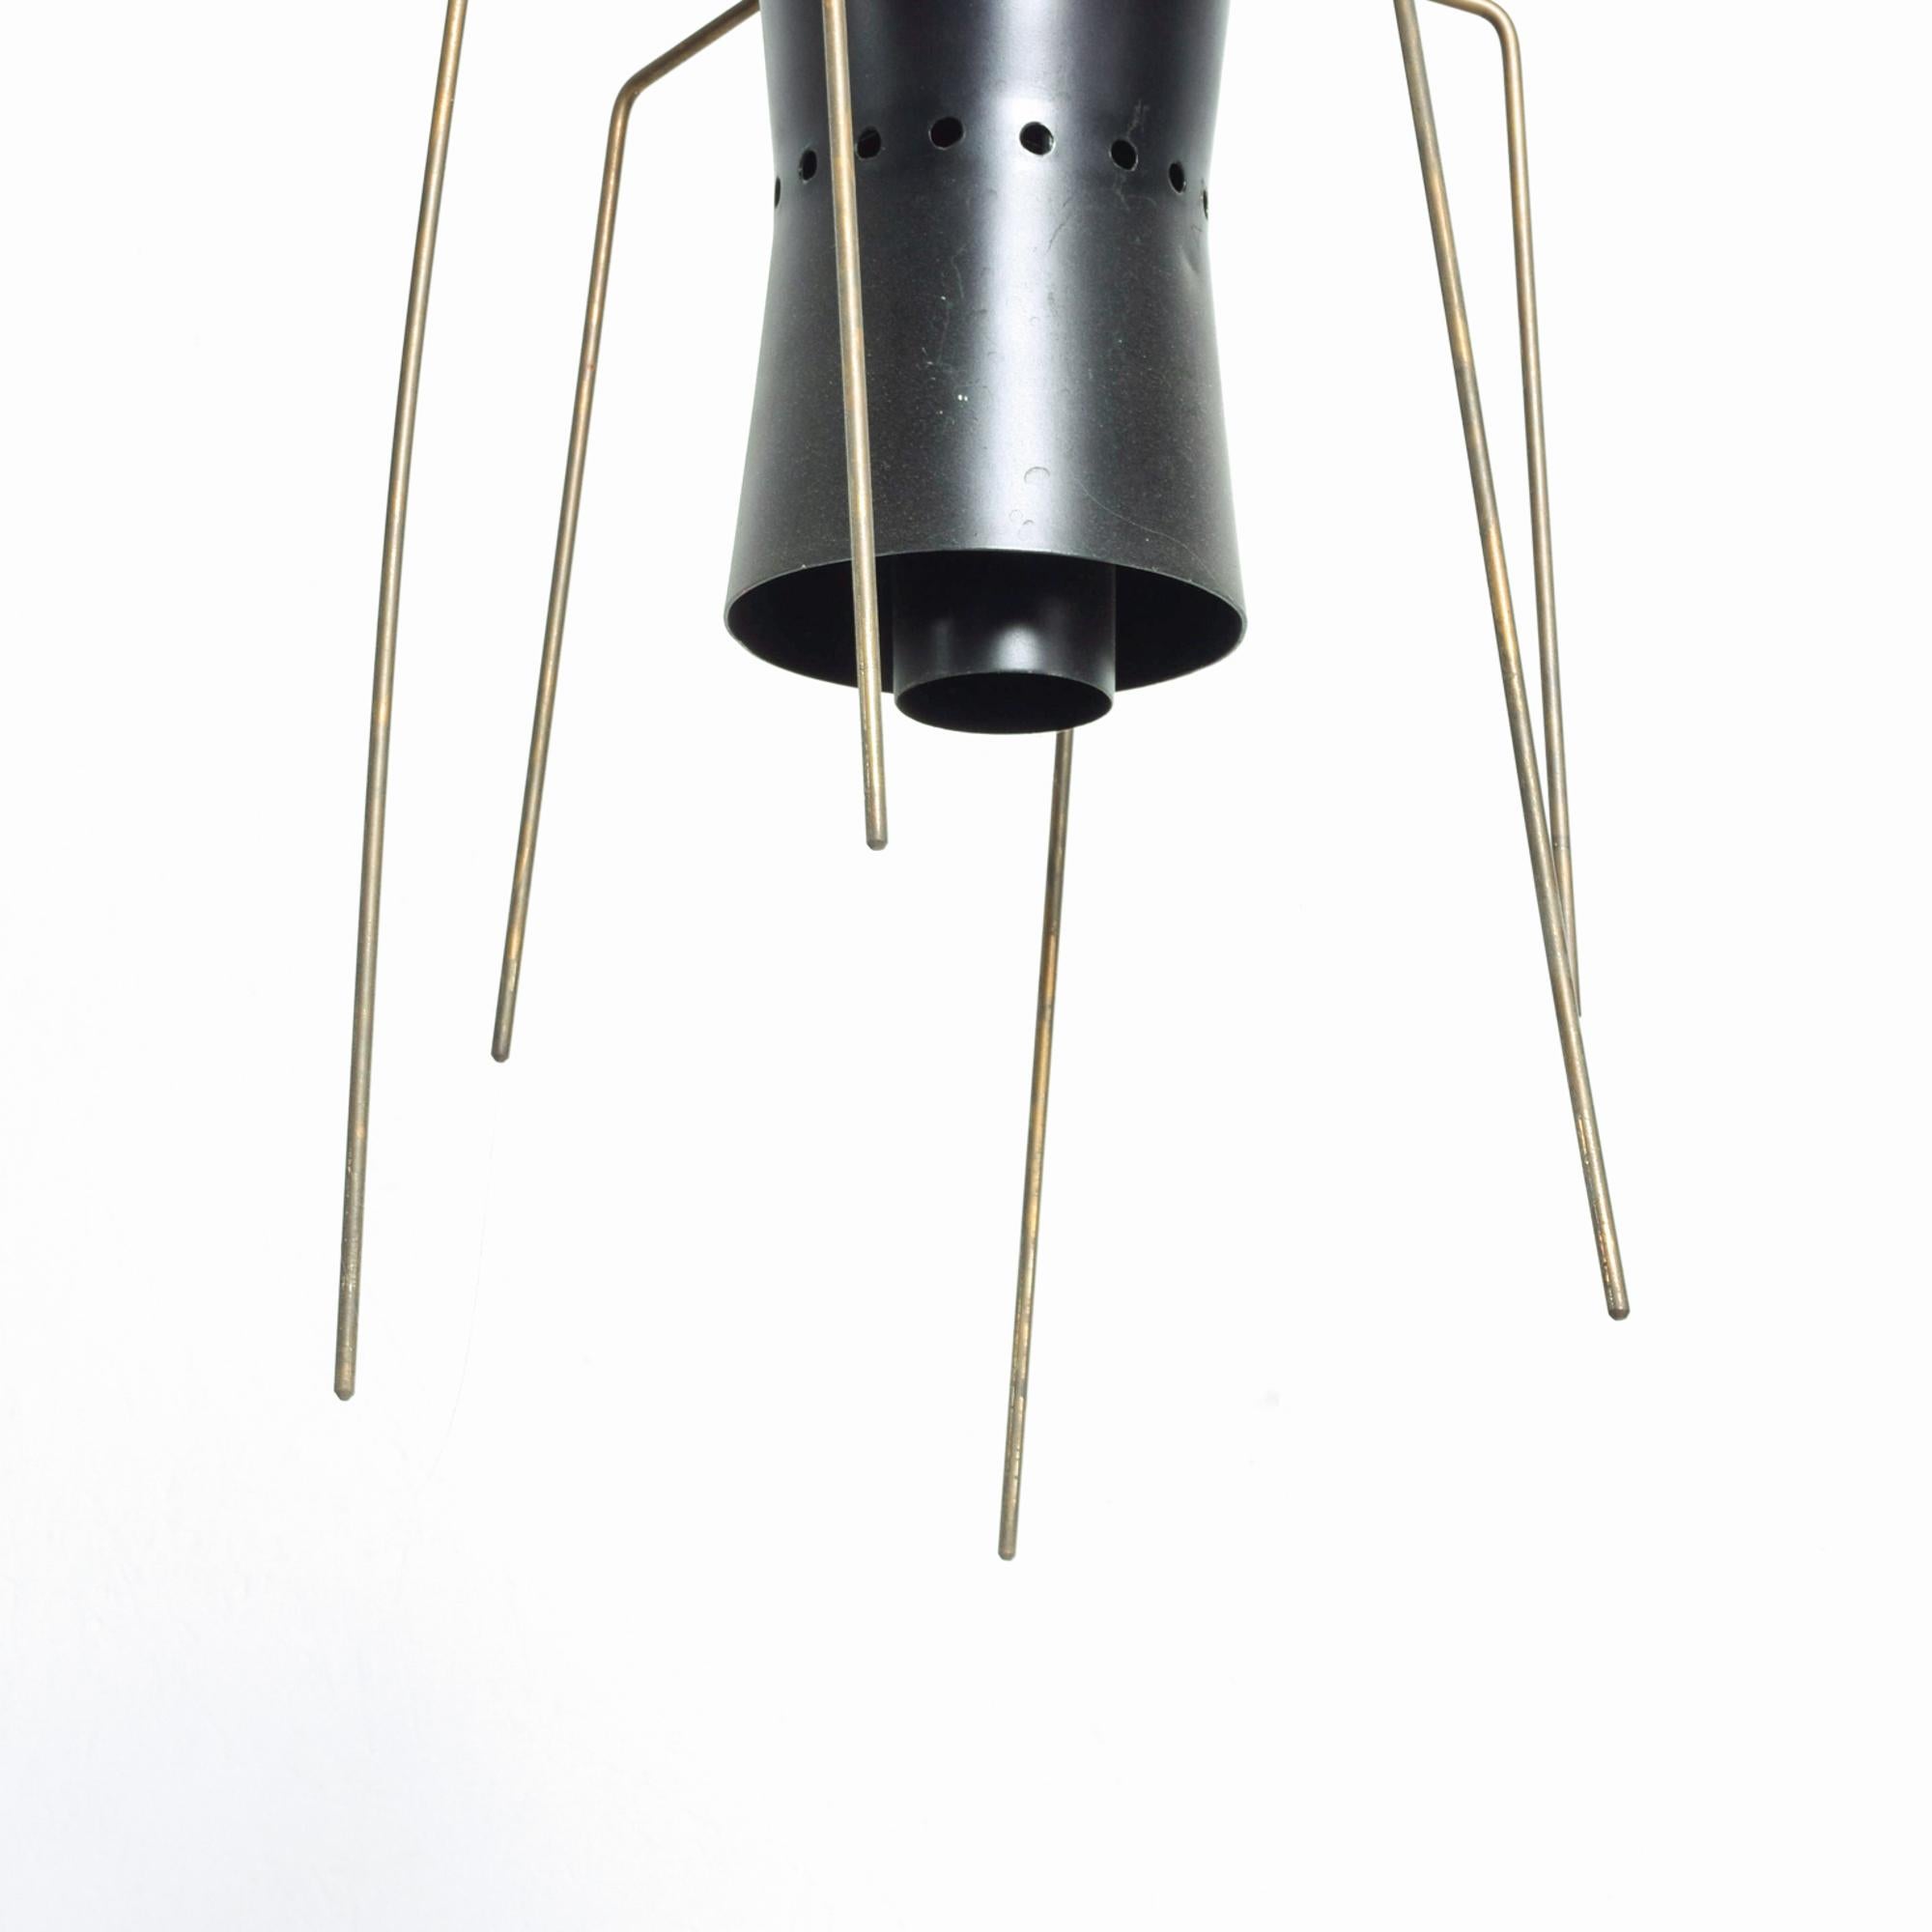 Mid-20th Century Black Spider Brass Legs Chandelier Pendant Light from Italy 1950s Stilnovo